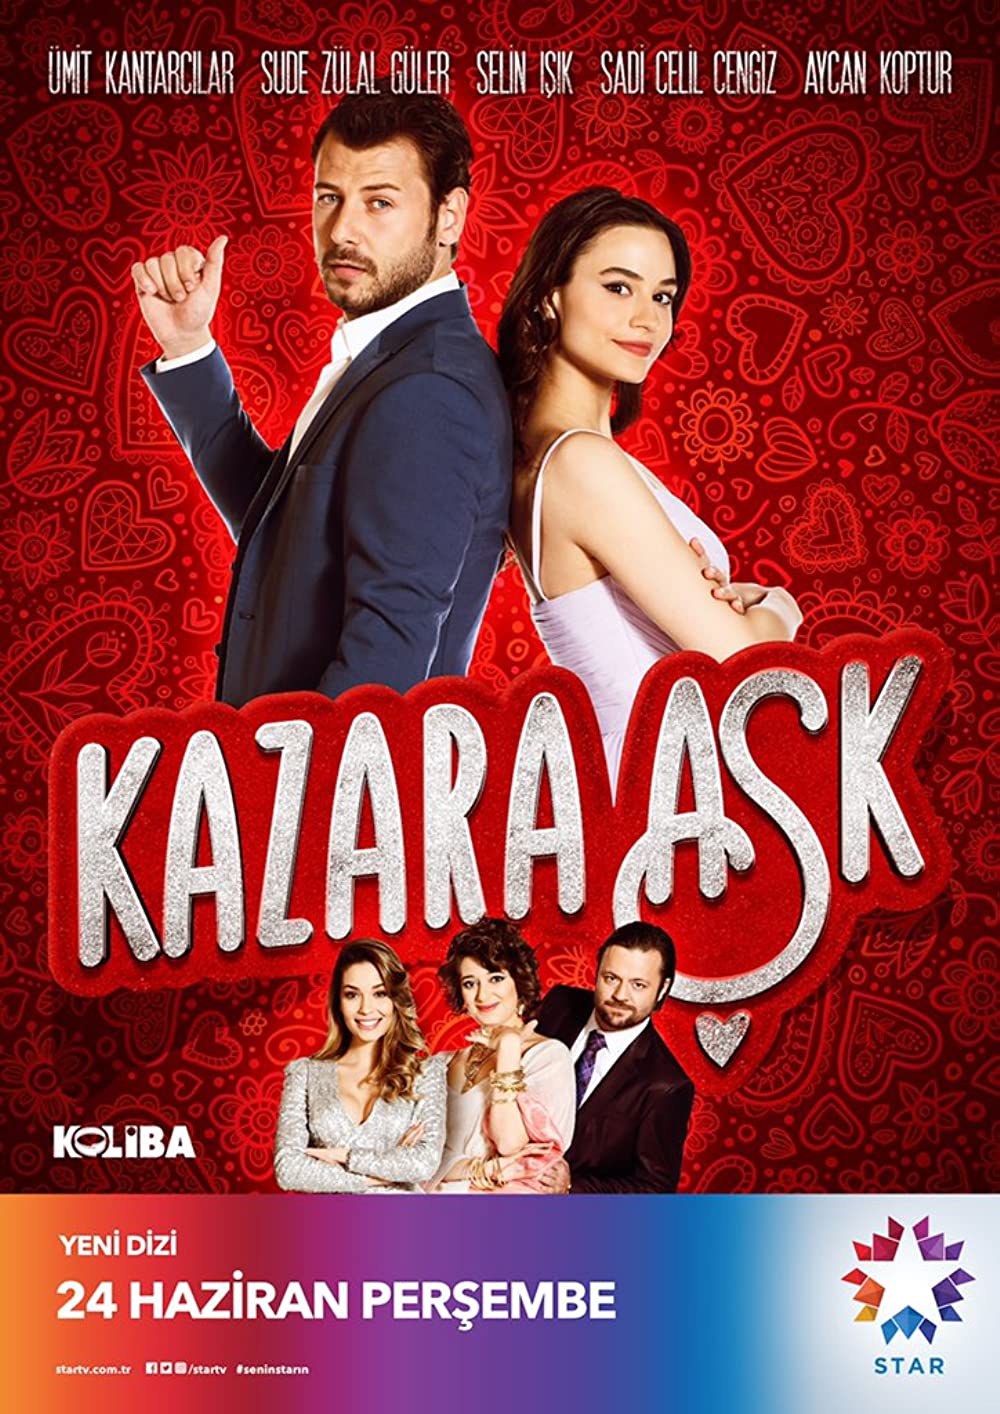 Kazara Ask (Accidental Love)